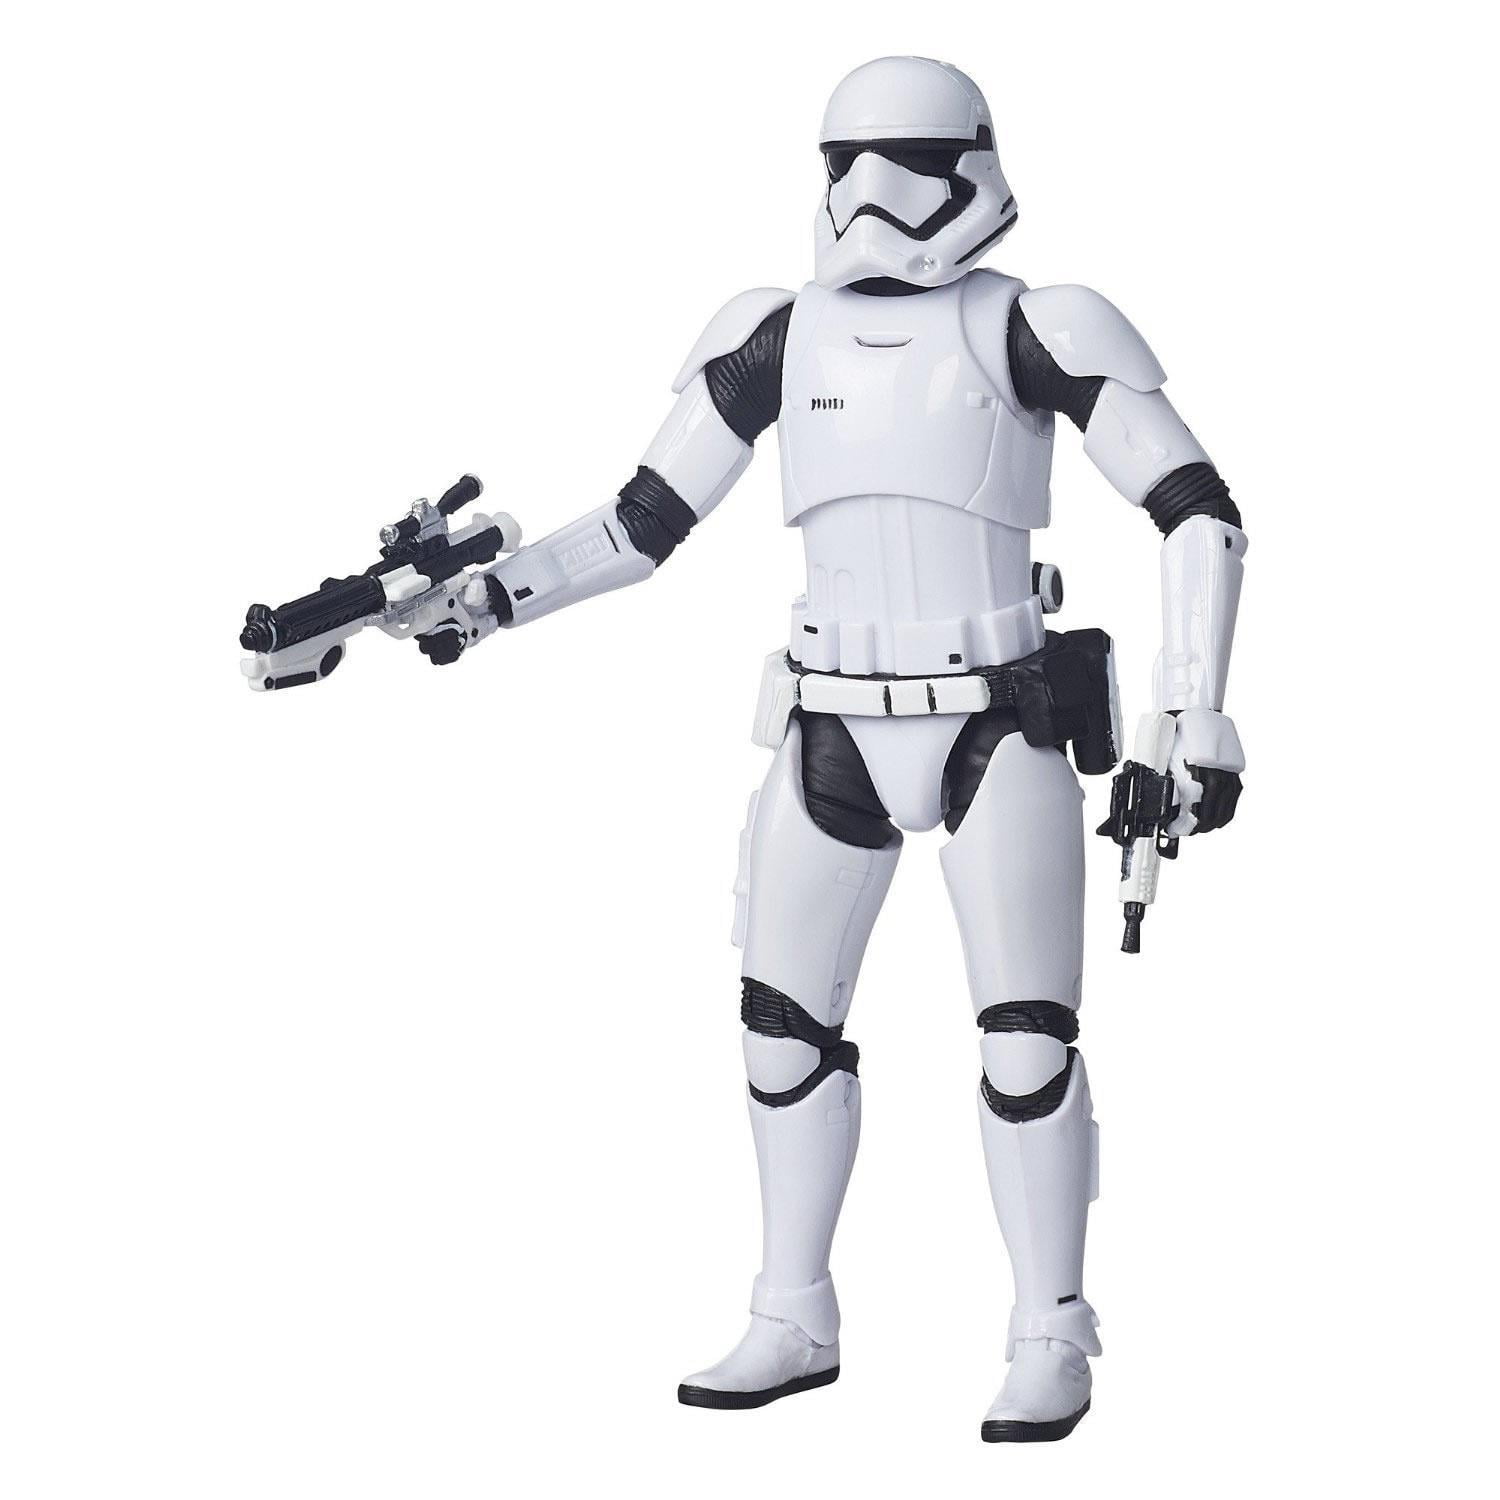 Disney Jakks Star Wars First Order Stormtrooper 18" 90825 New in Packing